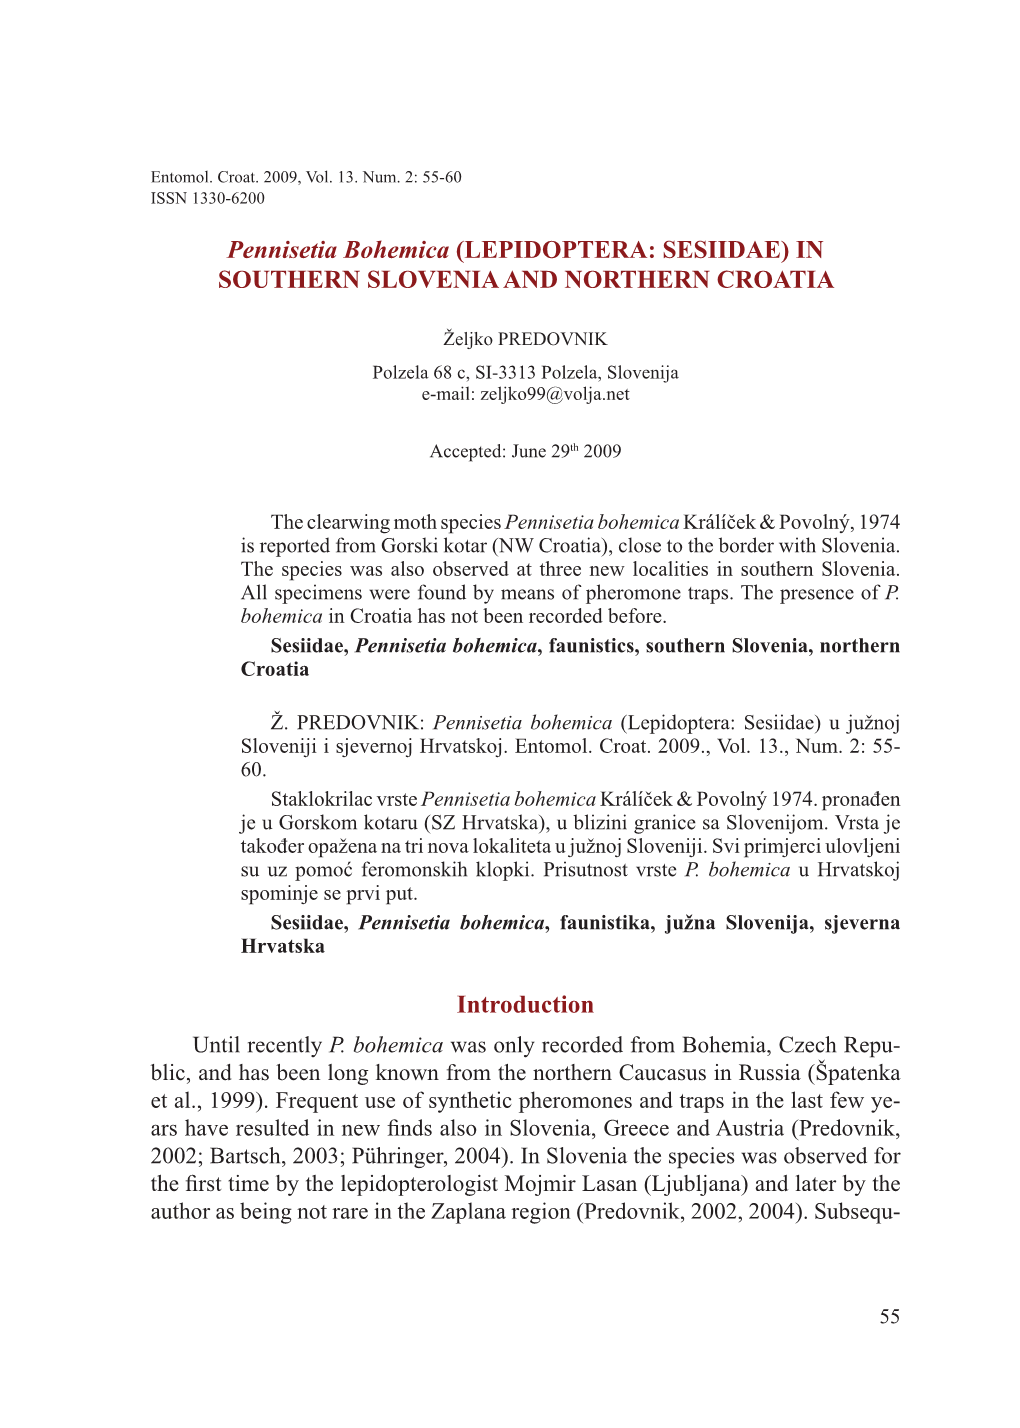 Pennisetia Bohemica (LEPIDOPTERA: SESIIDAE) in SOUTHERN Slovenia and NORTHERN CROATIA Introduction